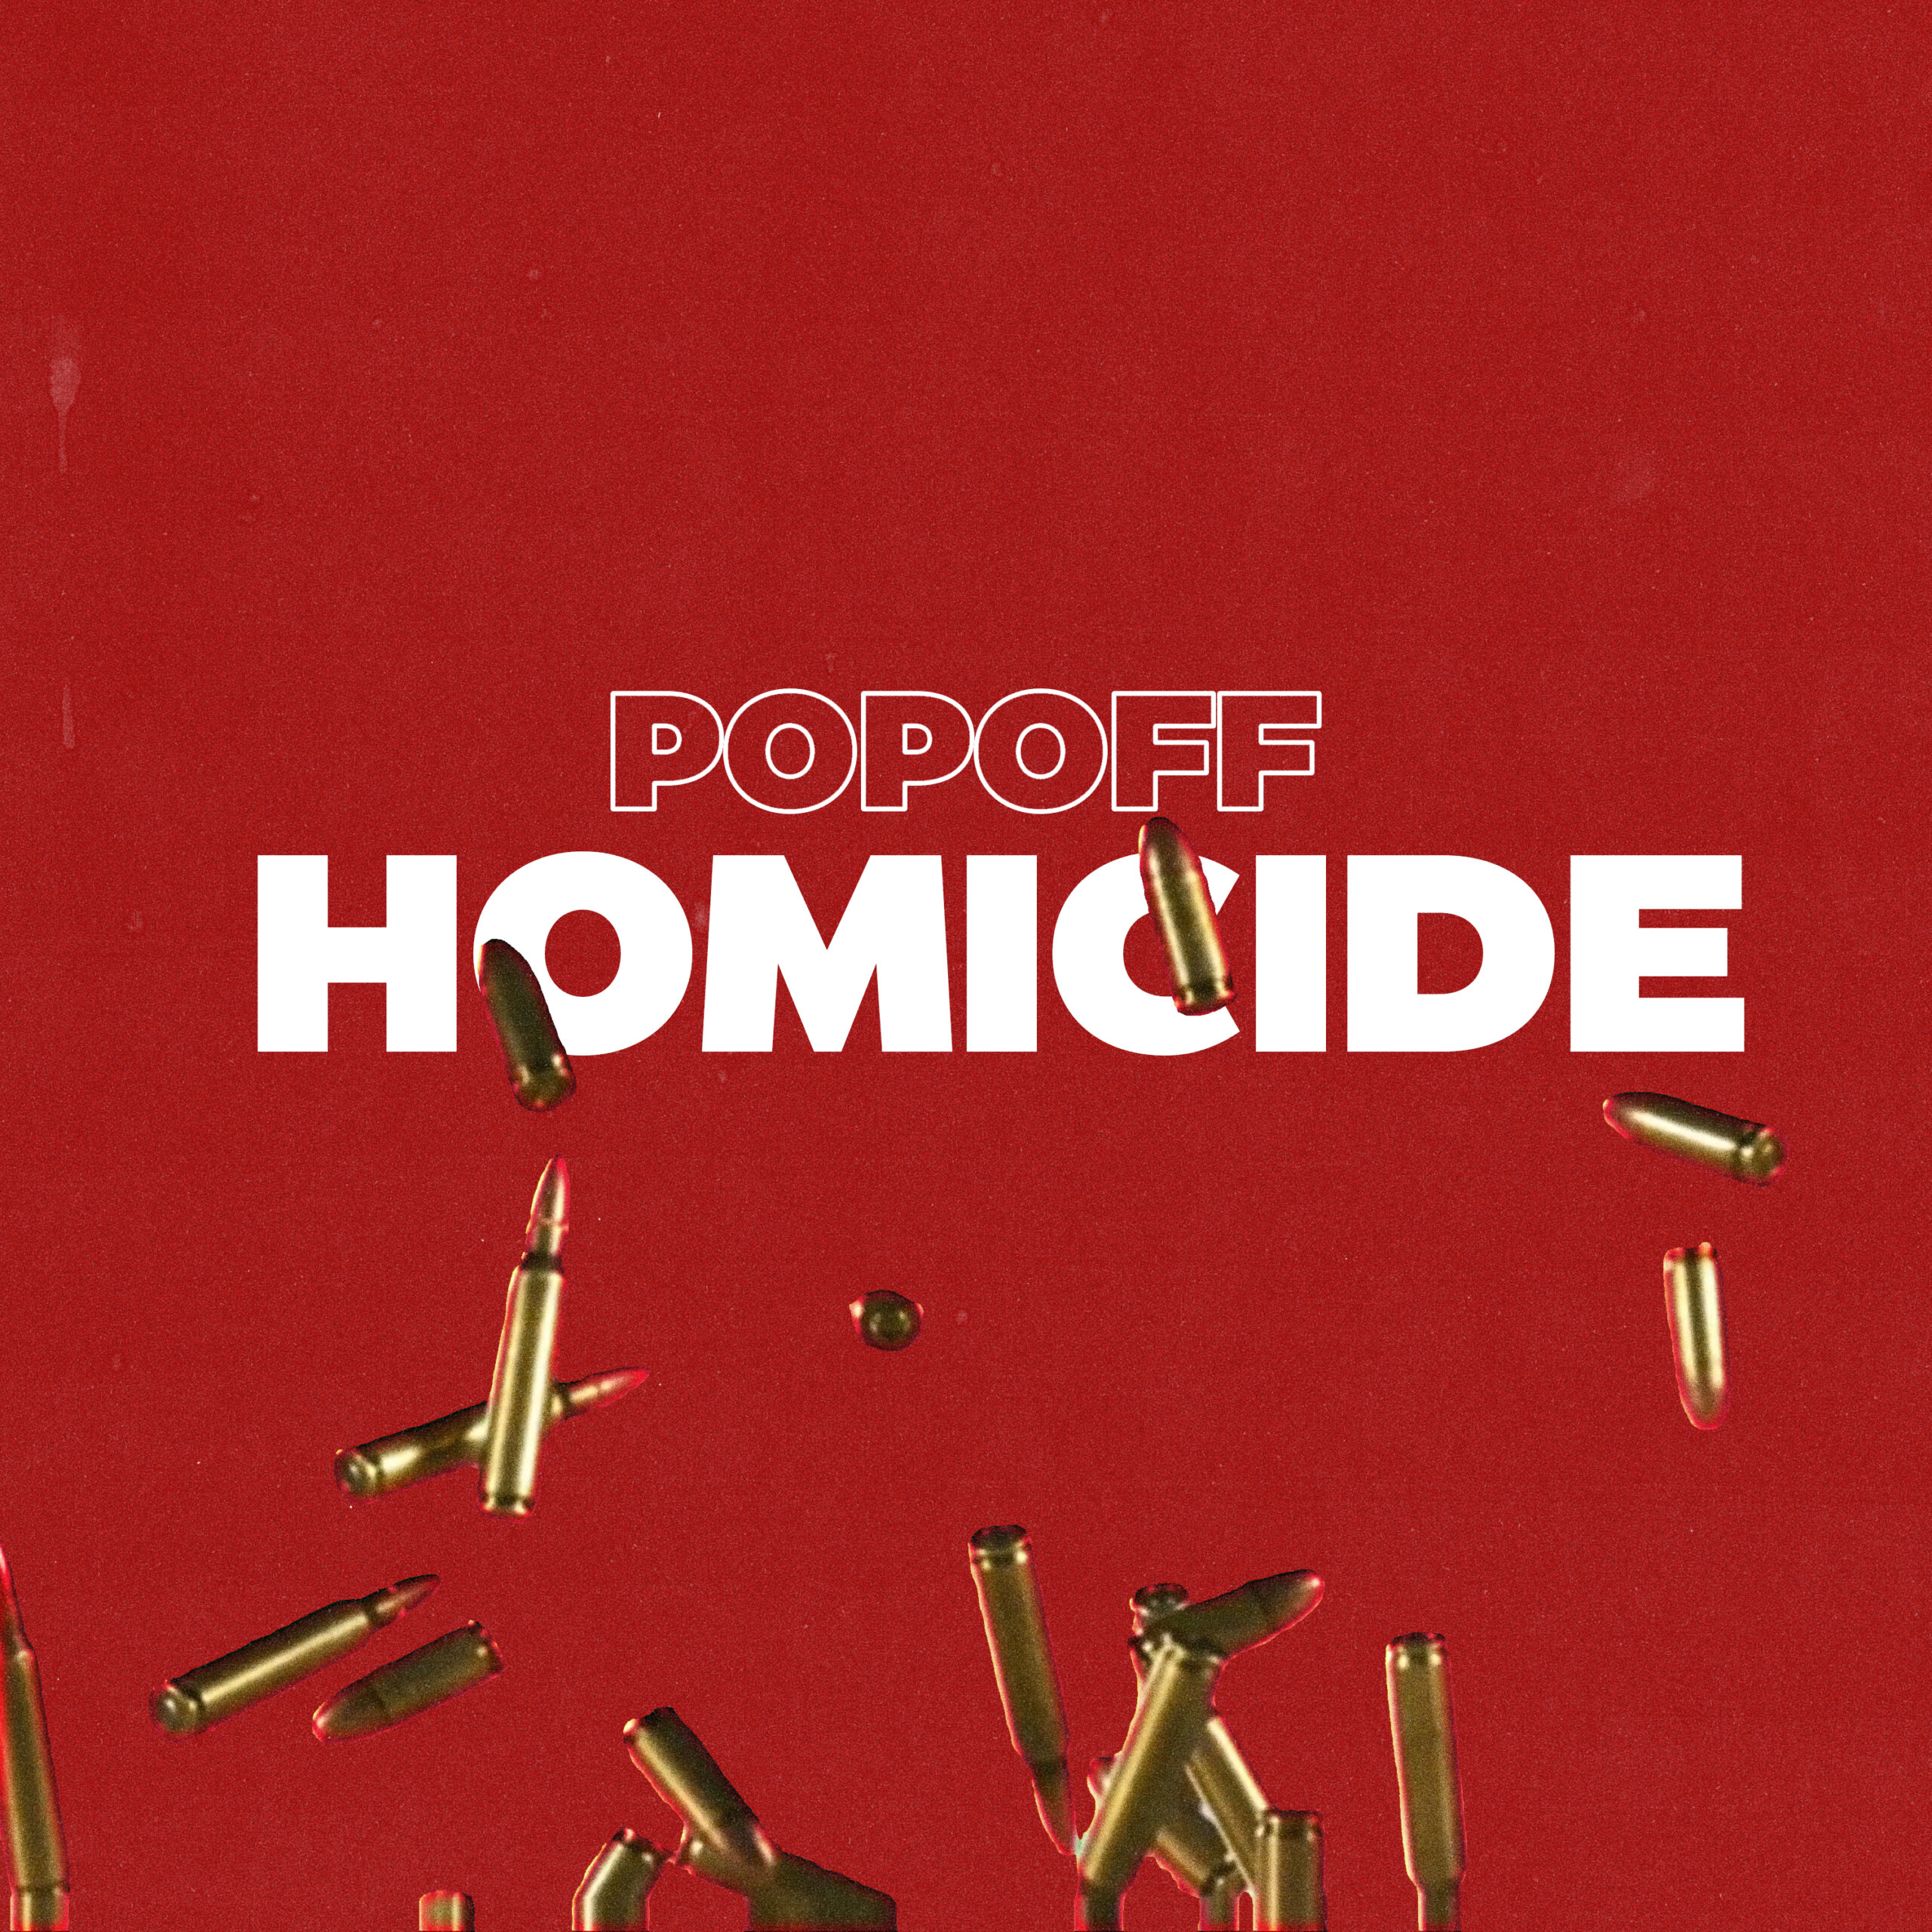 Popoff "Homicide" (Audio)